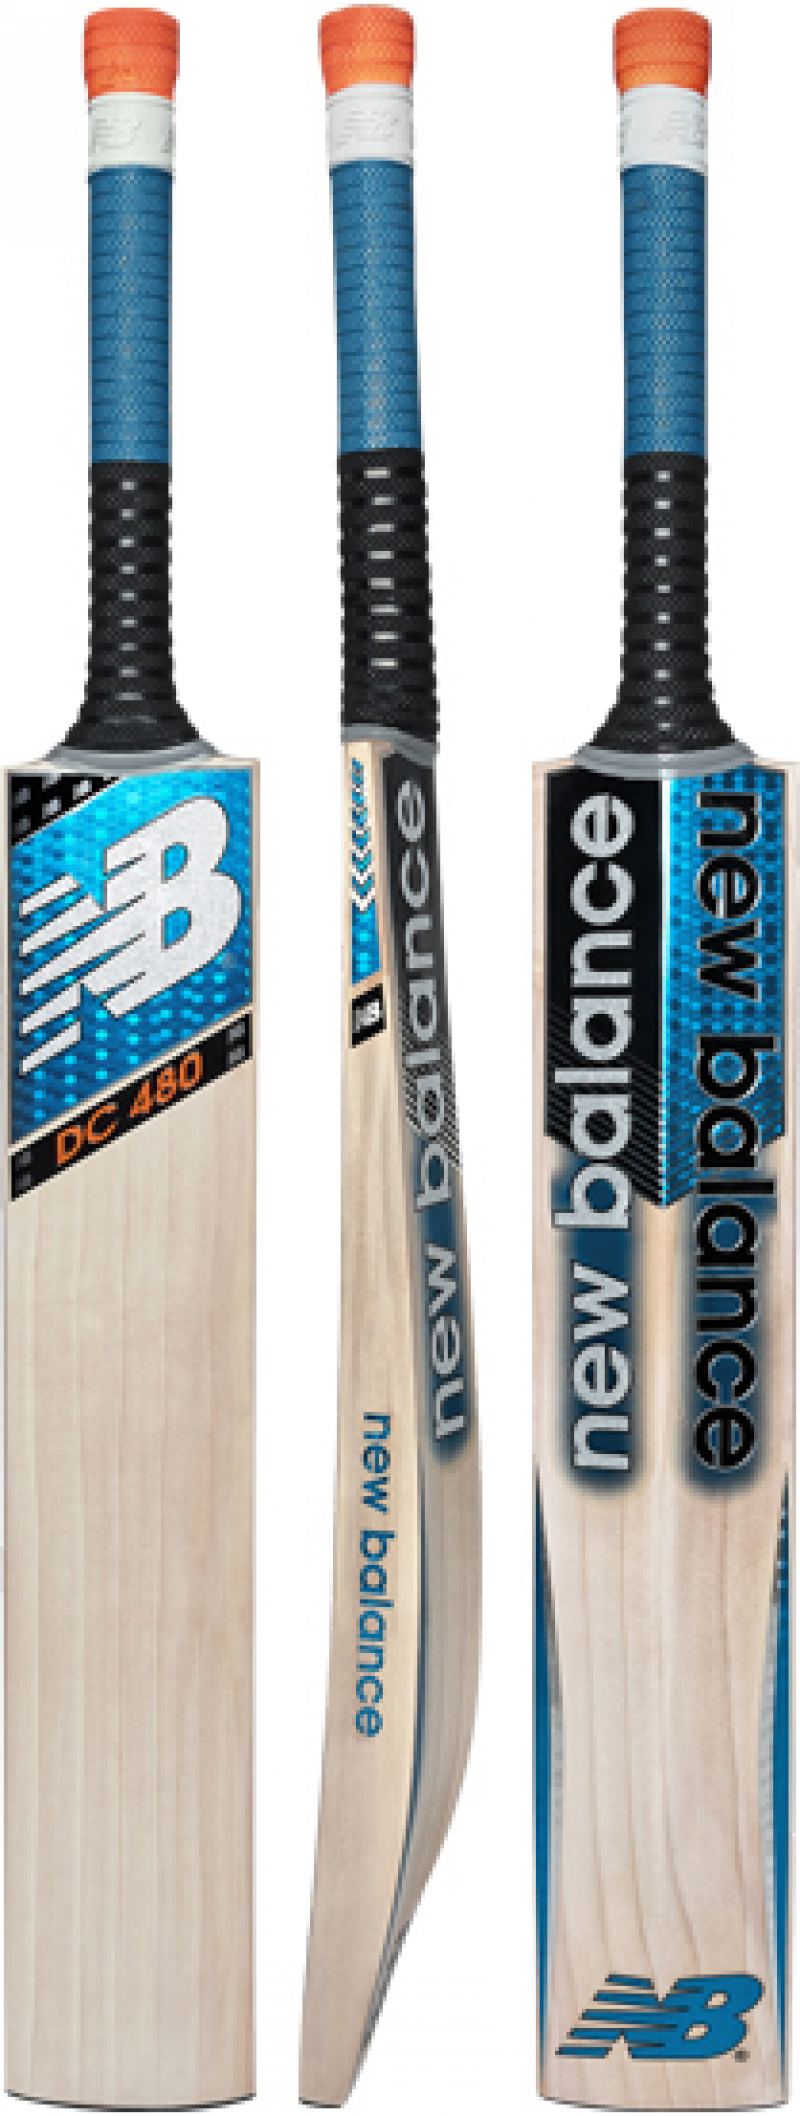 new balance size 4 cricket bat